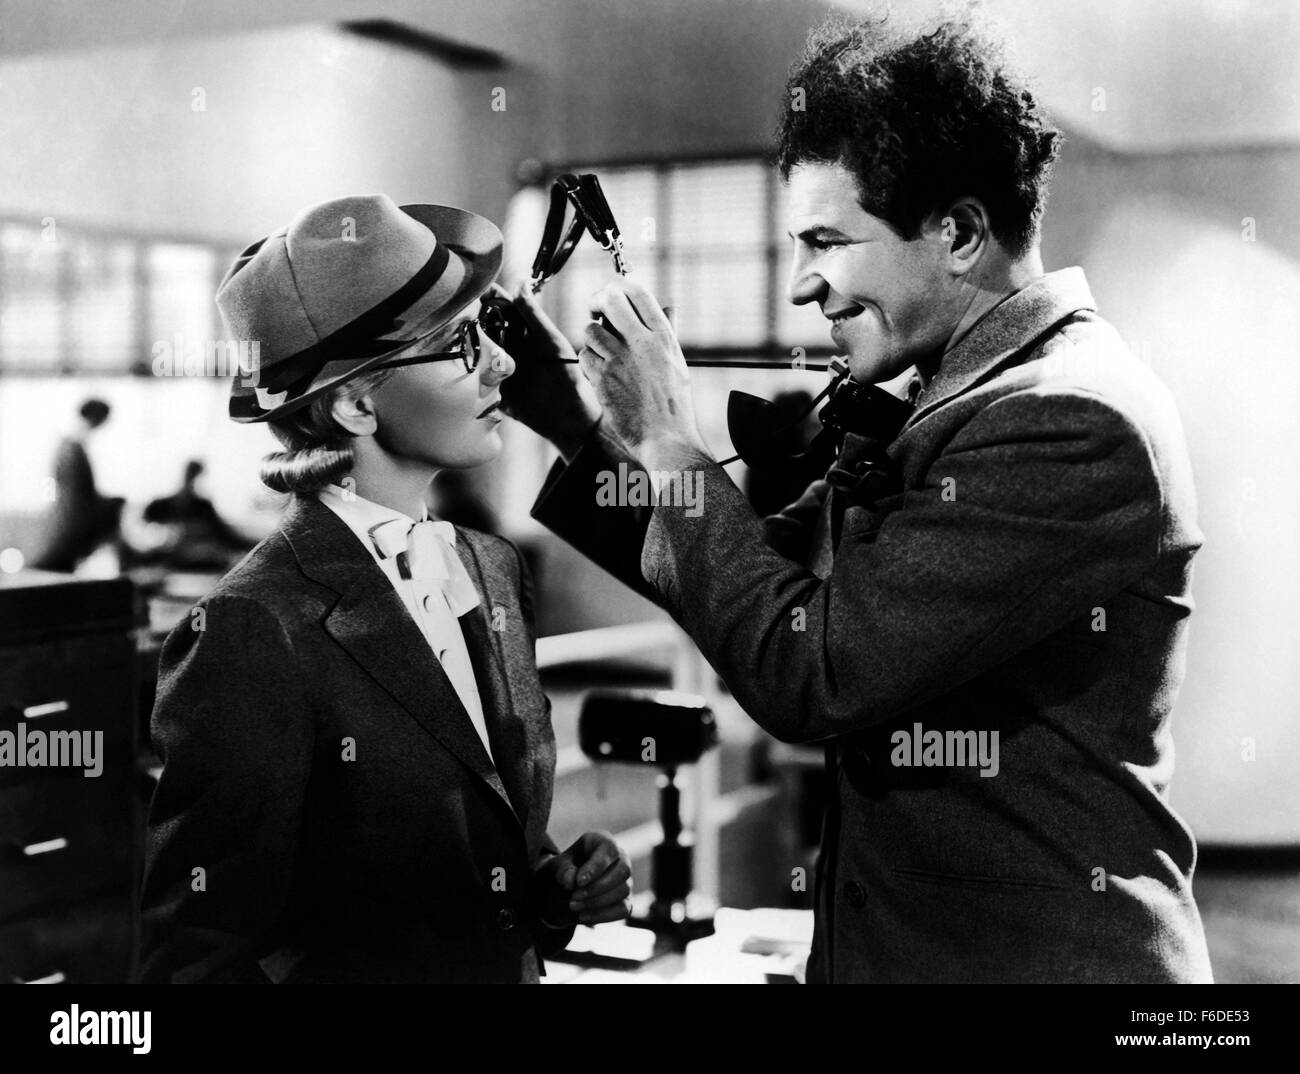 RELEASE DATE: Dec 24, 1936. MOVIE TITLE: More Than a Secretary. STUDIO: Columbia Pictures. PICTURED: JEAN ARTHUR as Carol Baldwin. Stock Photo